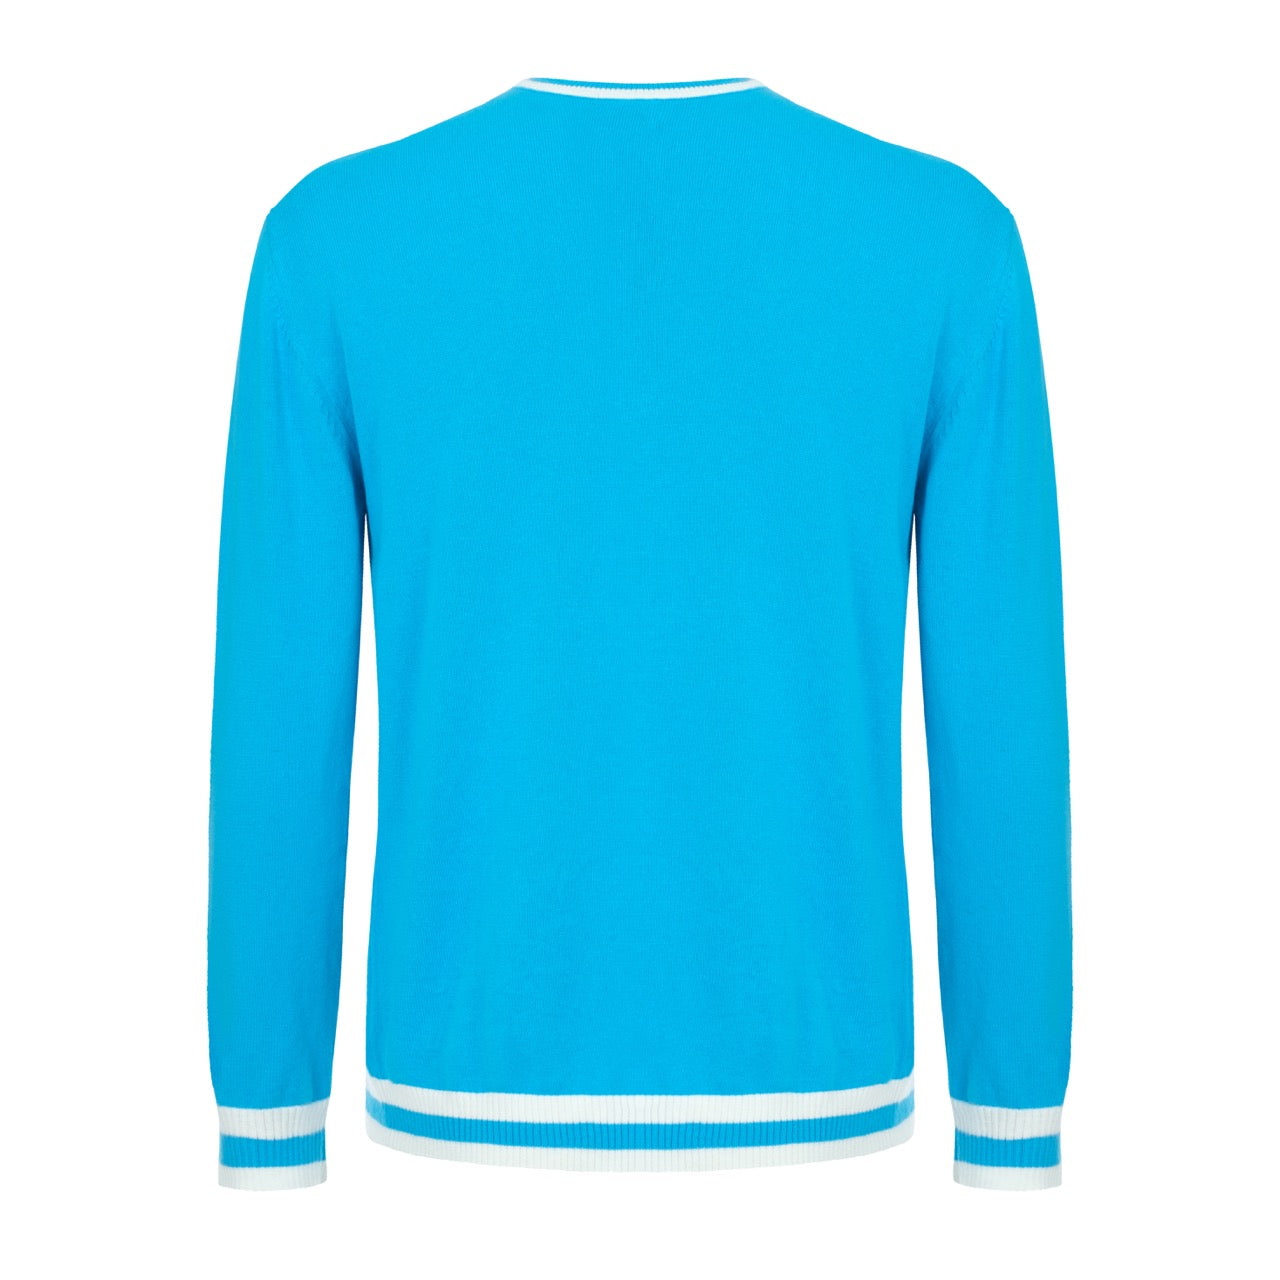 OXKNIT Men Vintage Clothing 1970s Mod Style Casual Sky Blue Long Sleeve Knitwear Retro Top